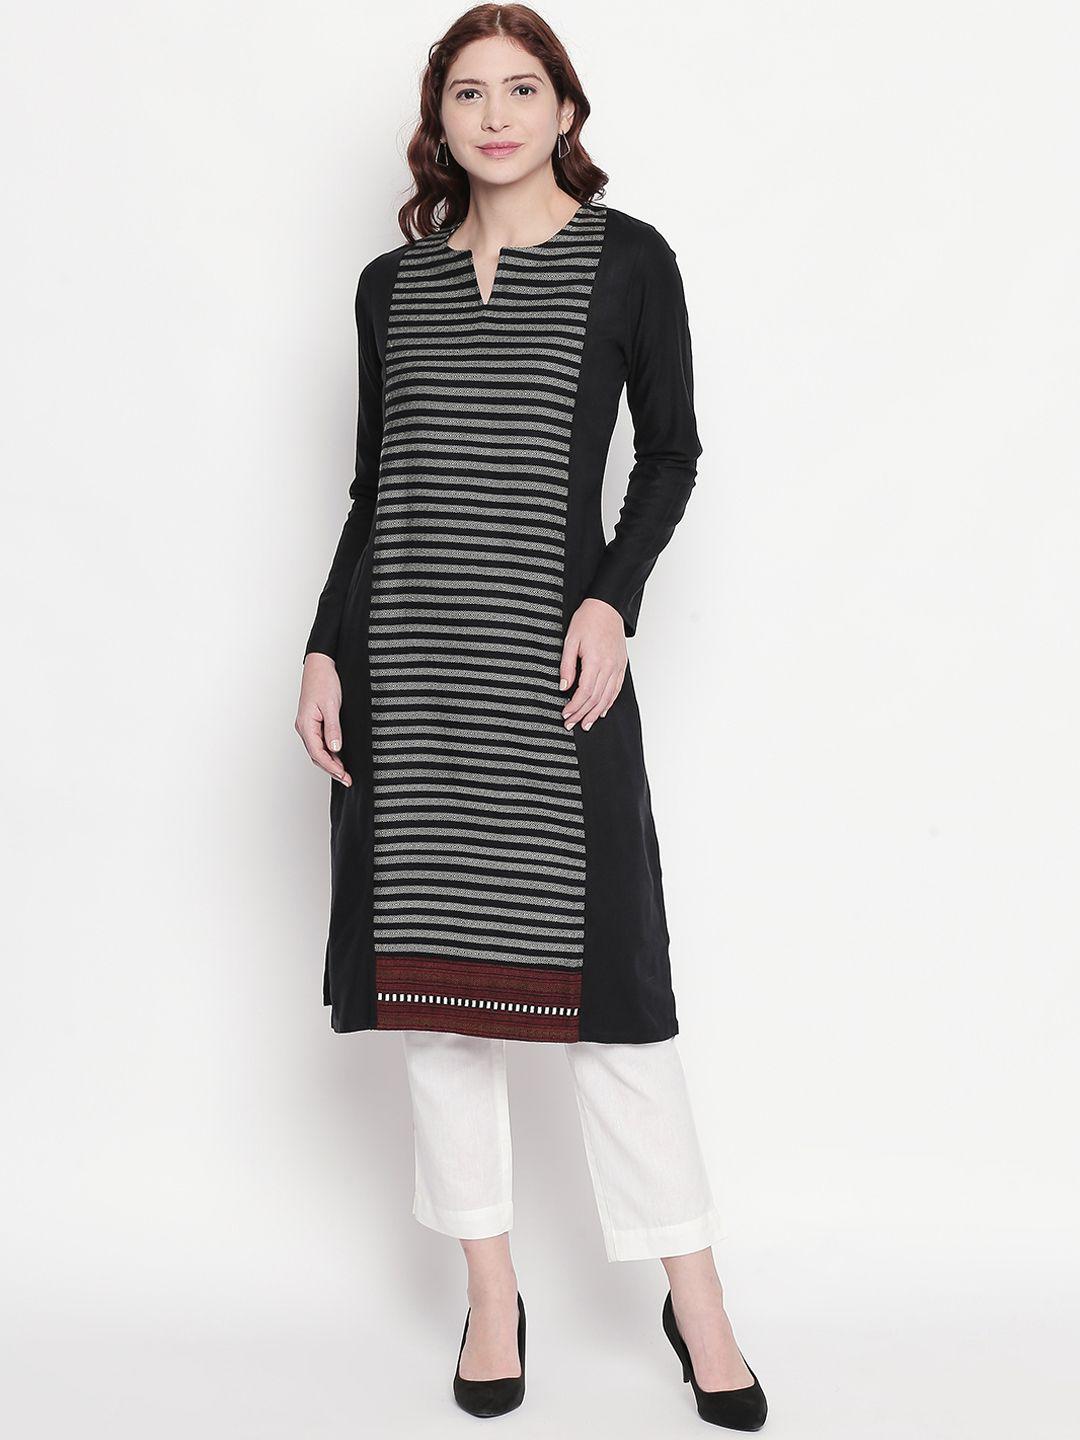 rangmanch by pantaloons women black & grey striped straight kurta